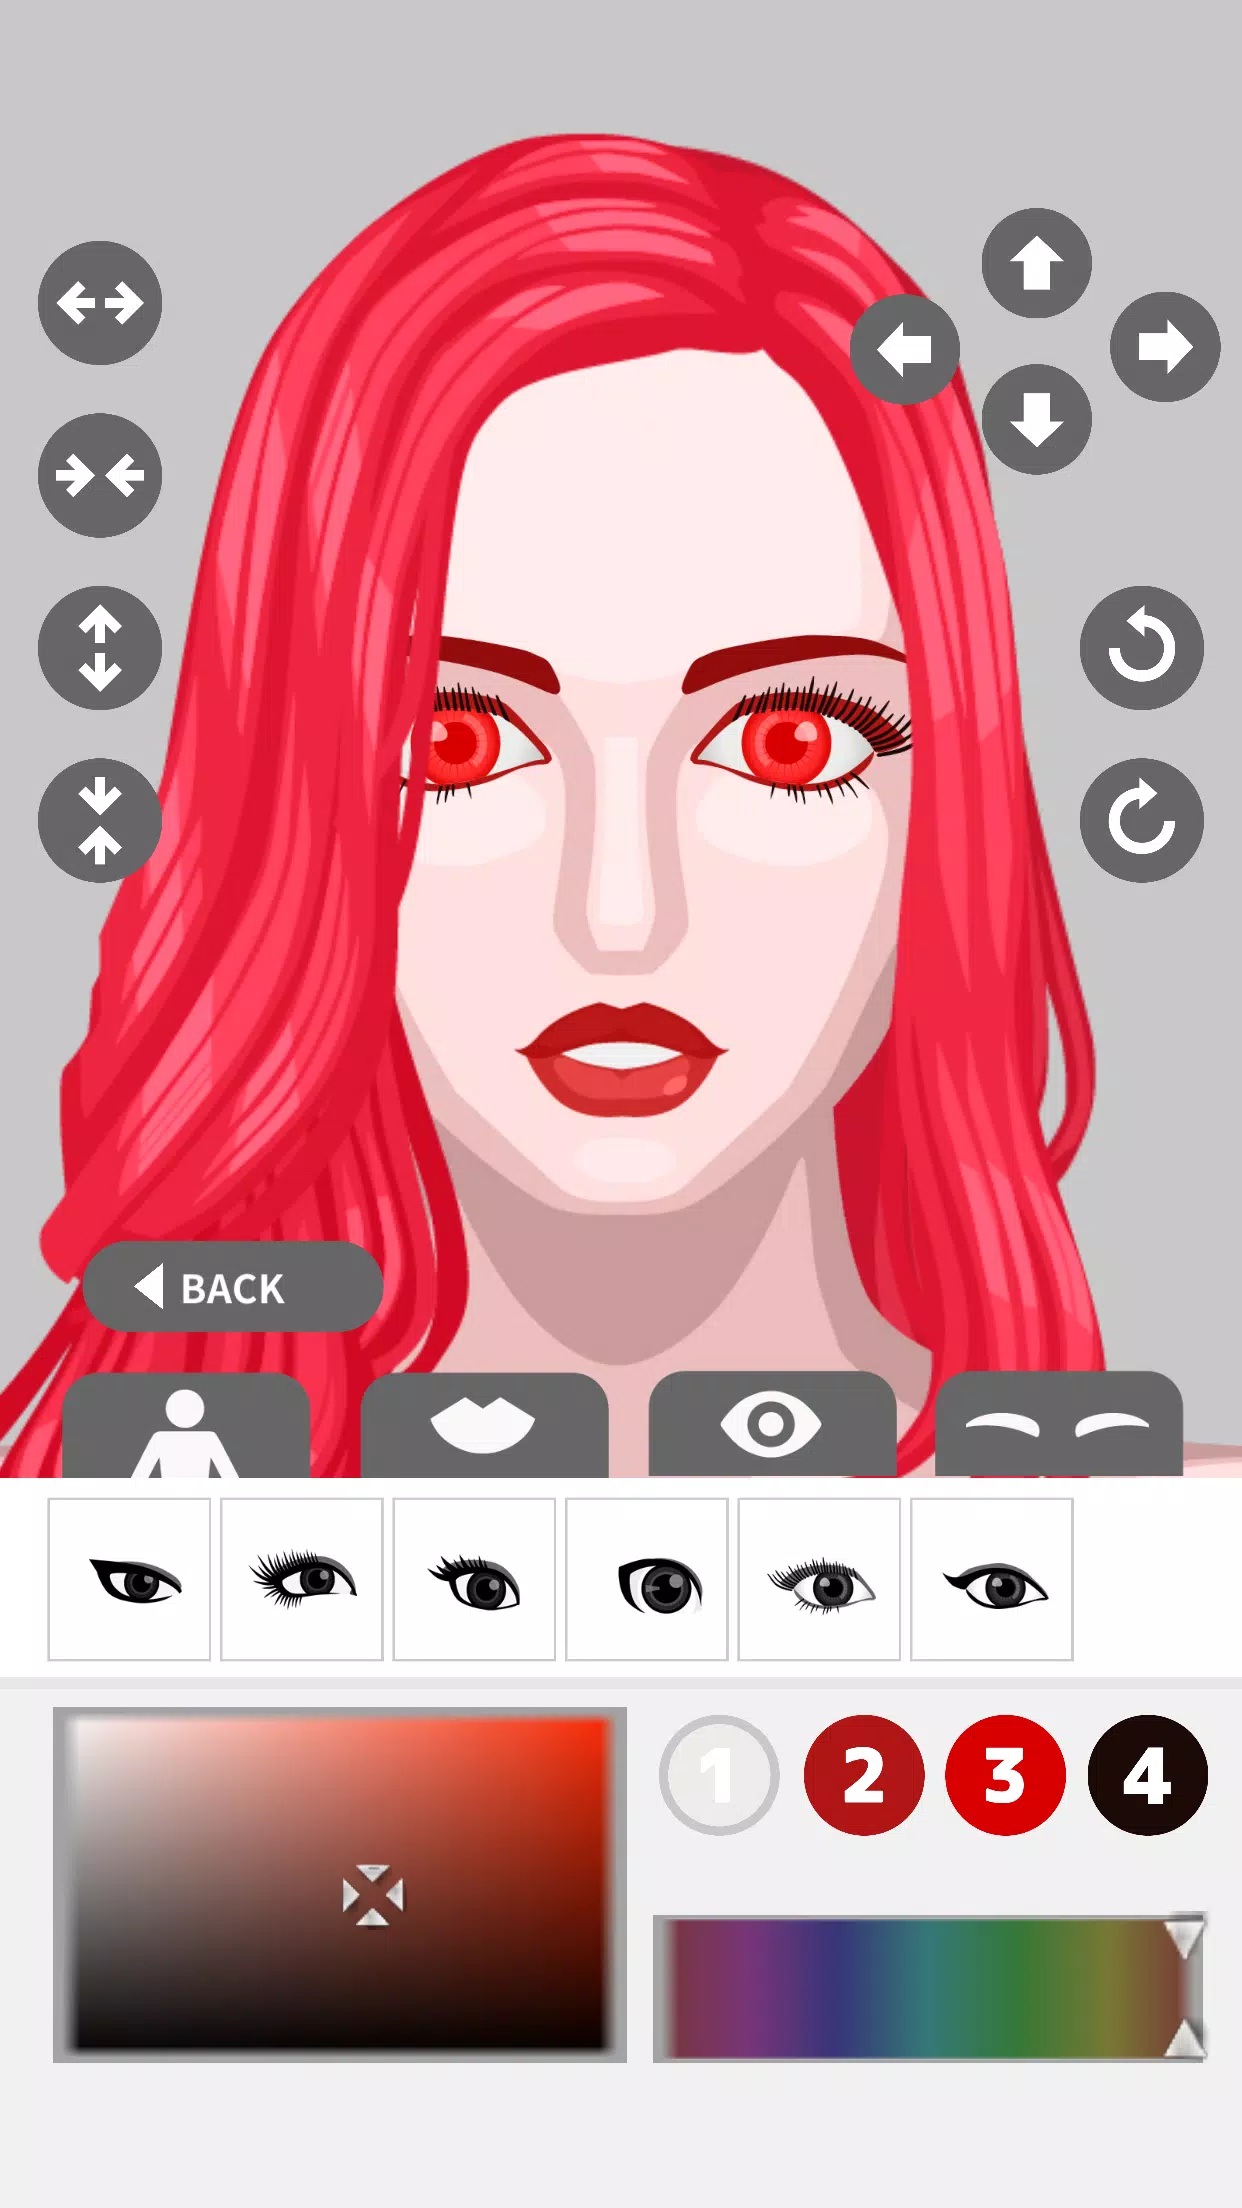 Hero Girl Avater Maker APK for Android Download